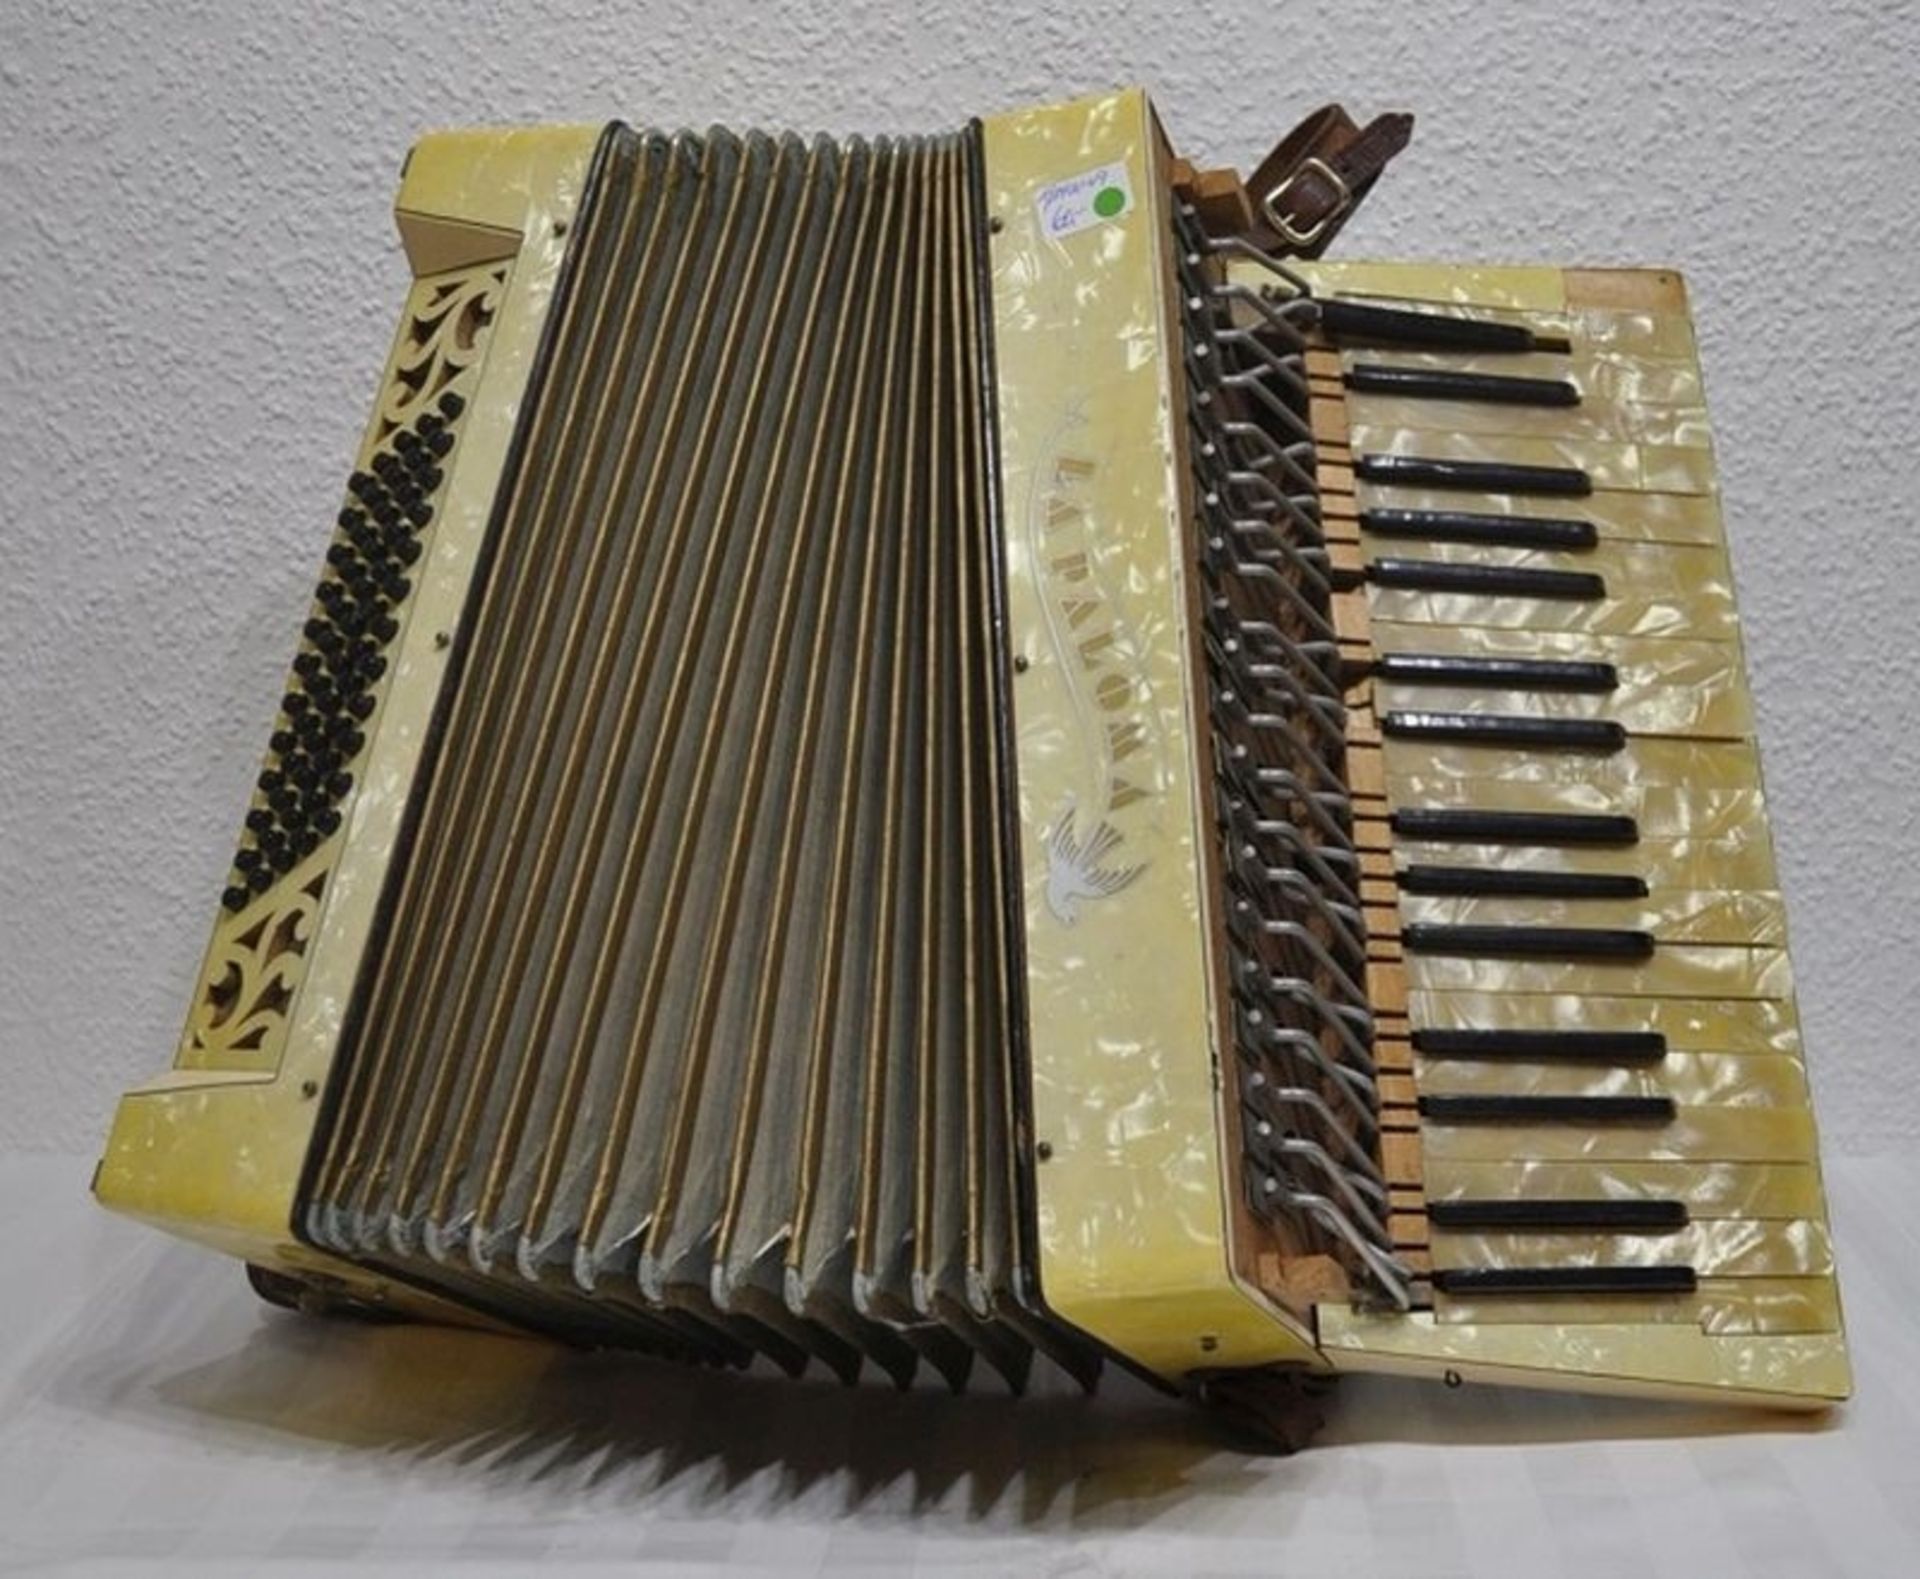 Schöne alte Handharmonika, Schifferklavier "La Paloma" - Image 3 of 3